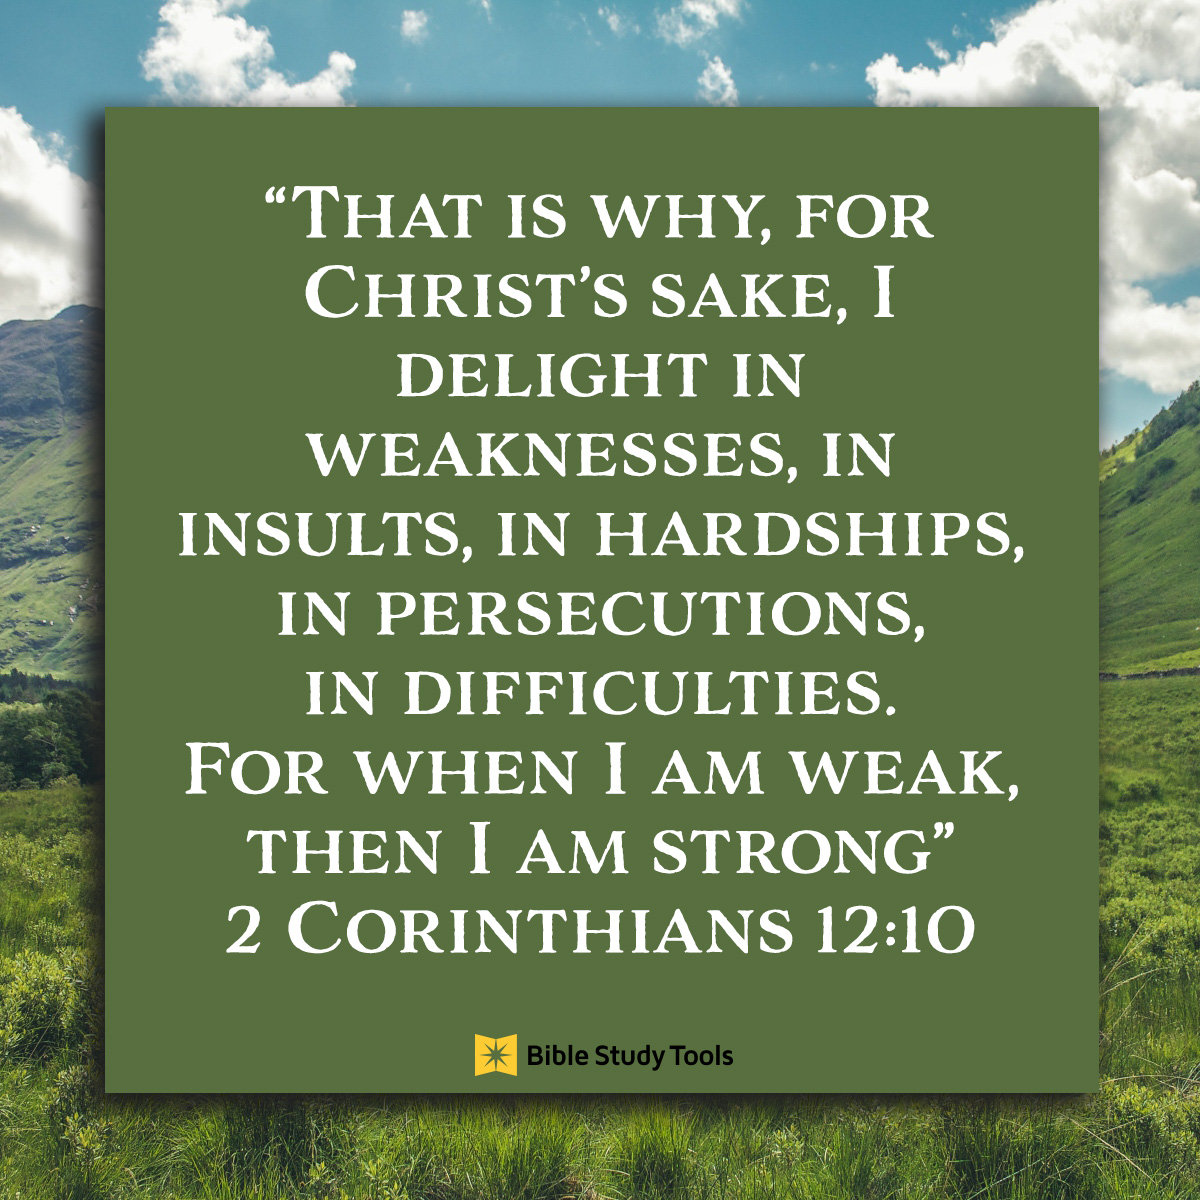 2 Corinthians 12:10, inspirational image